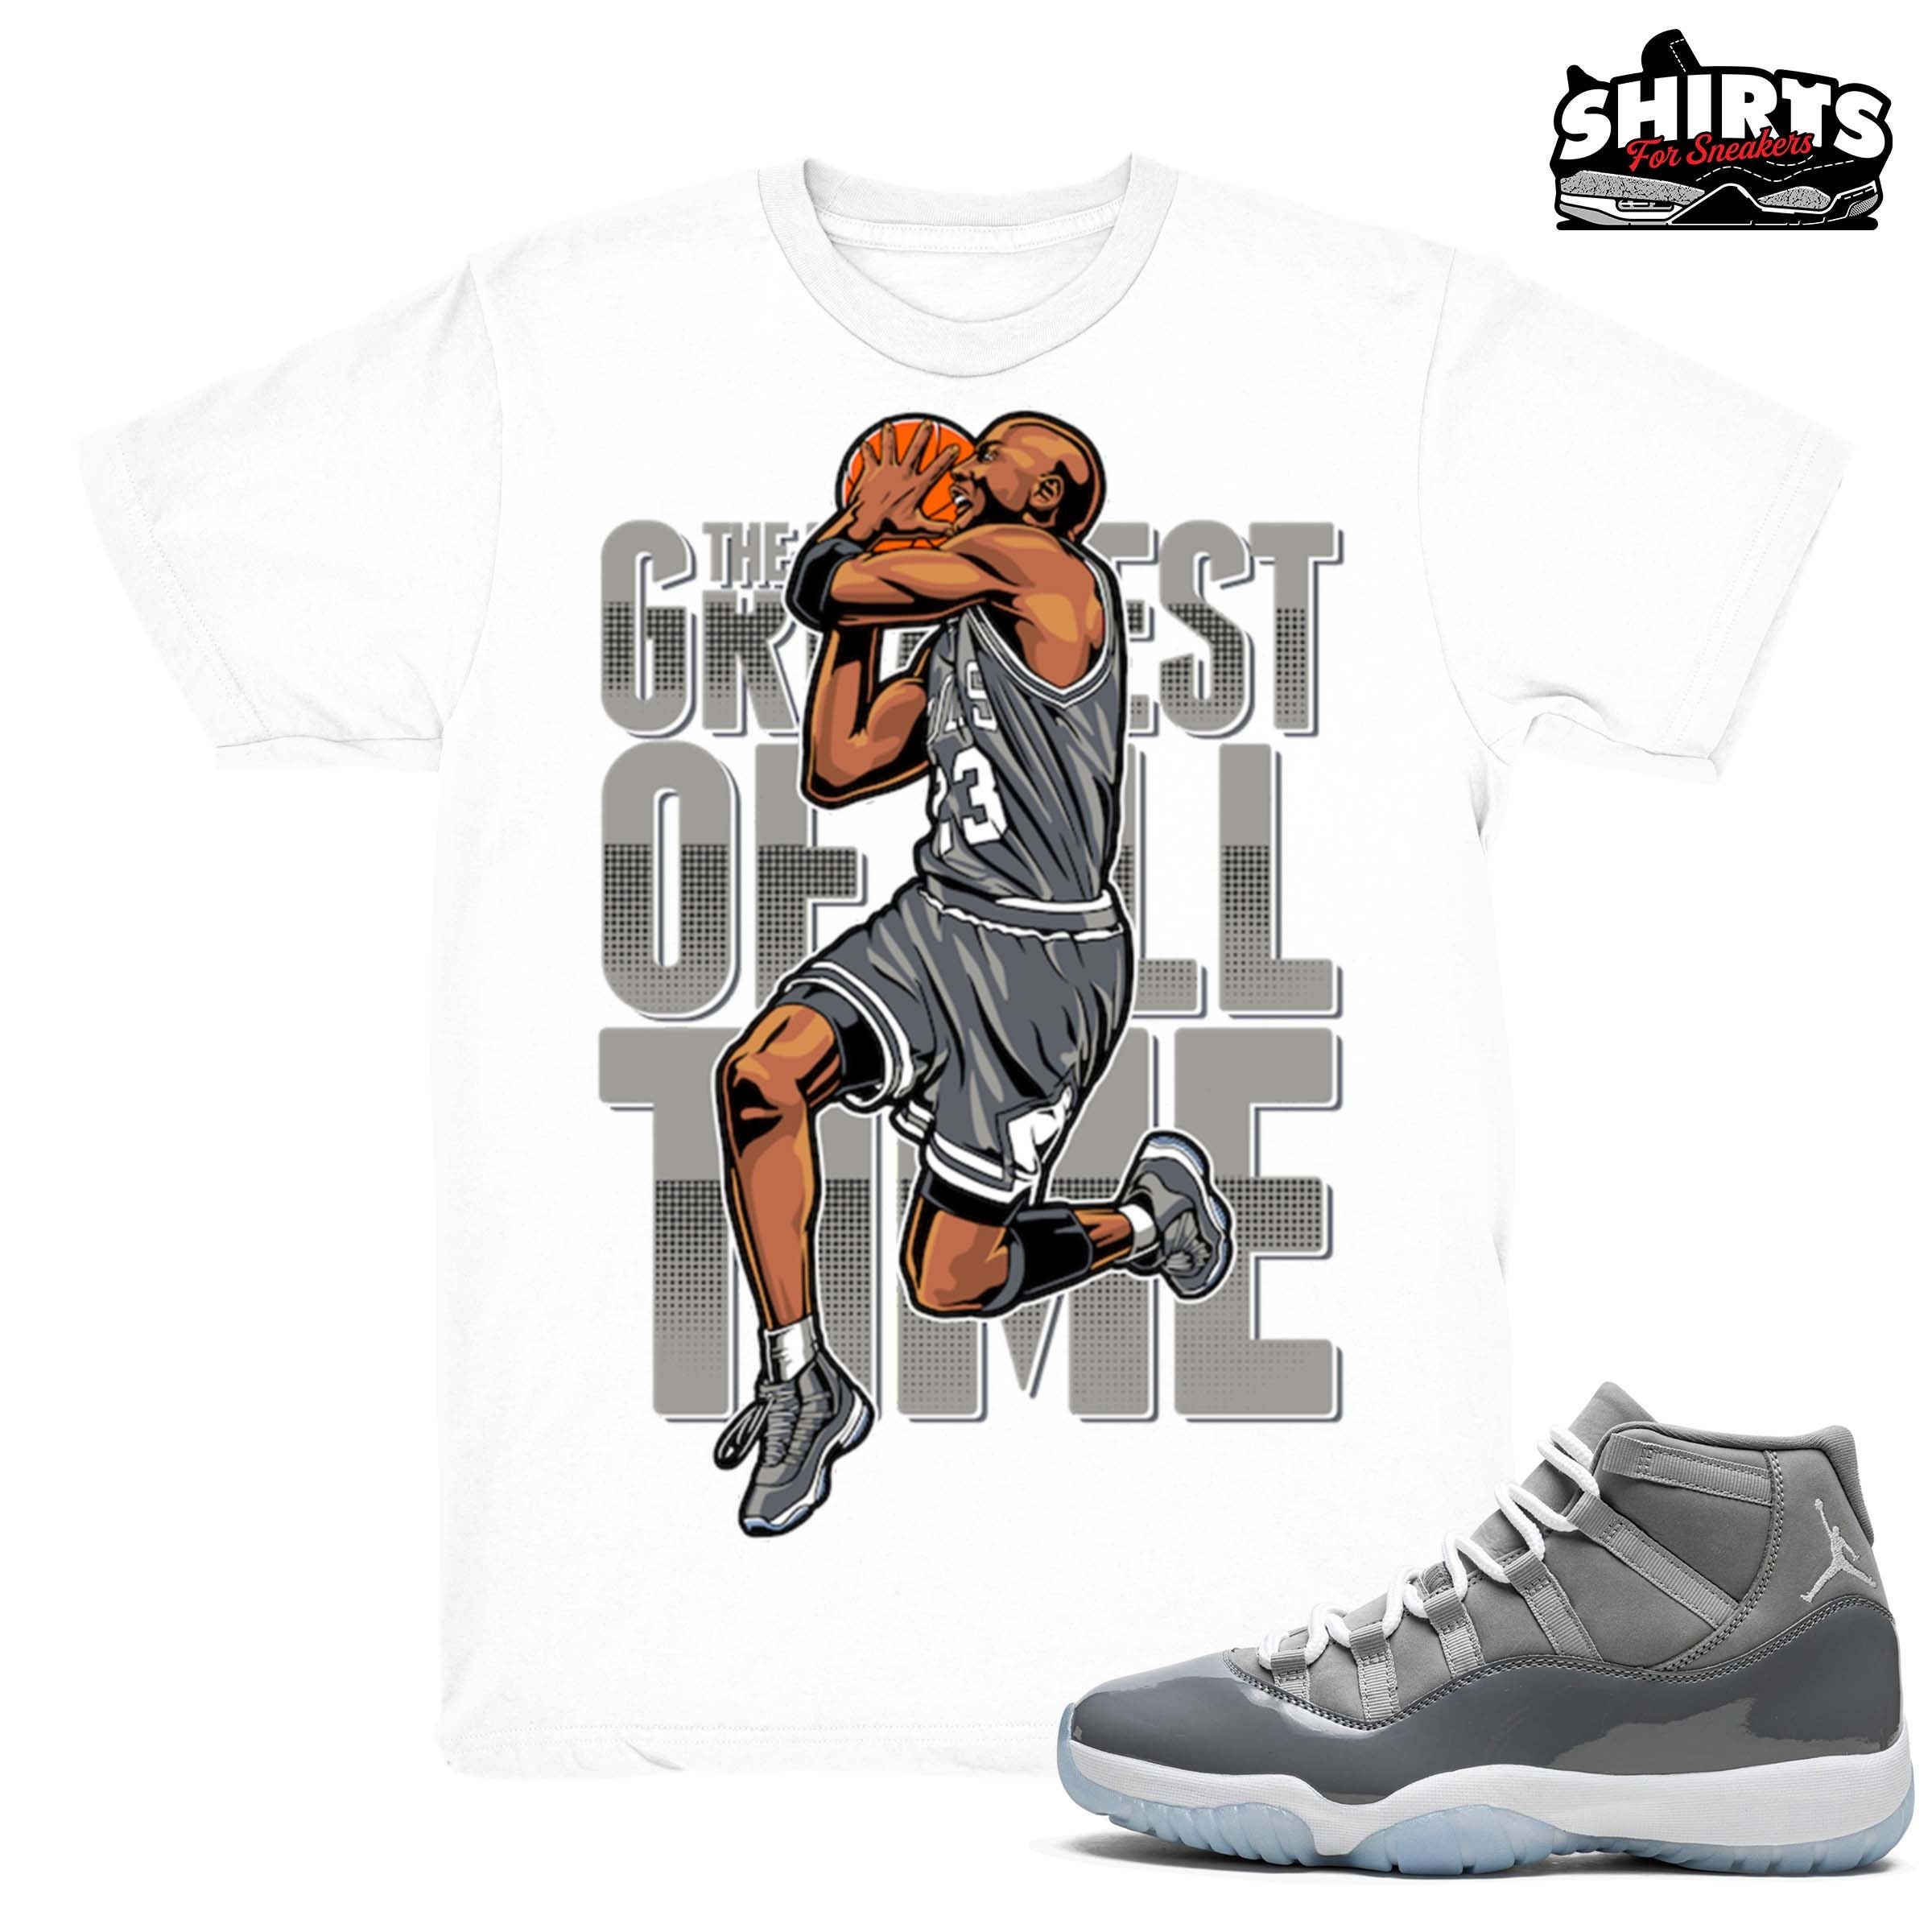 Cool Grey 11 Shirt the Greatest Retro 